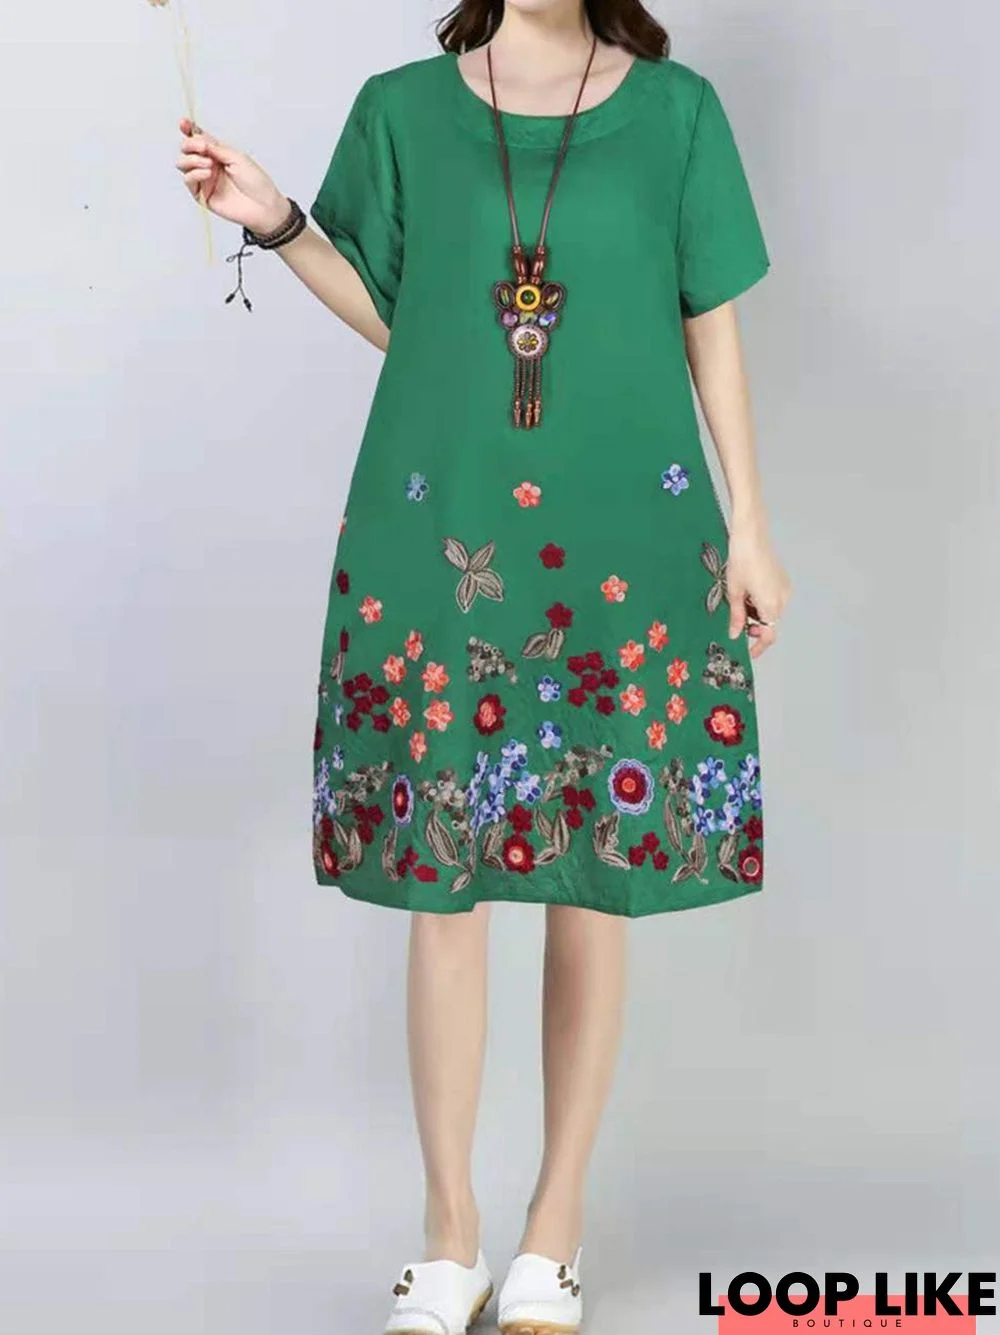 Plus Size Women Embroidery Dresses Vintage Beach Party Sundress S-5Xl